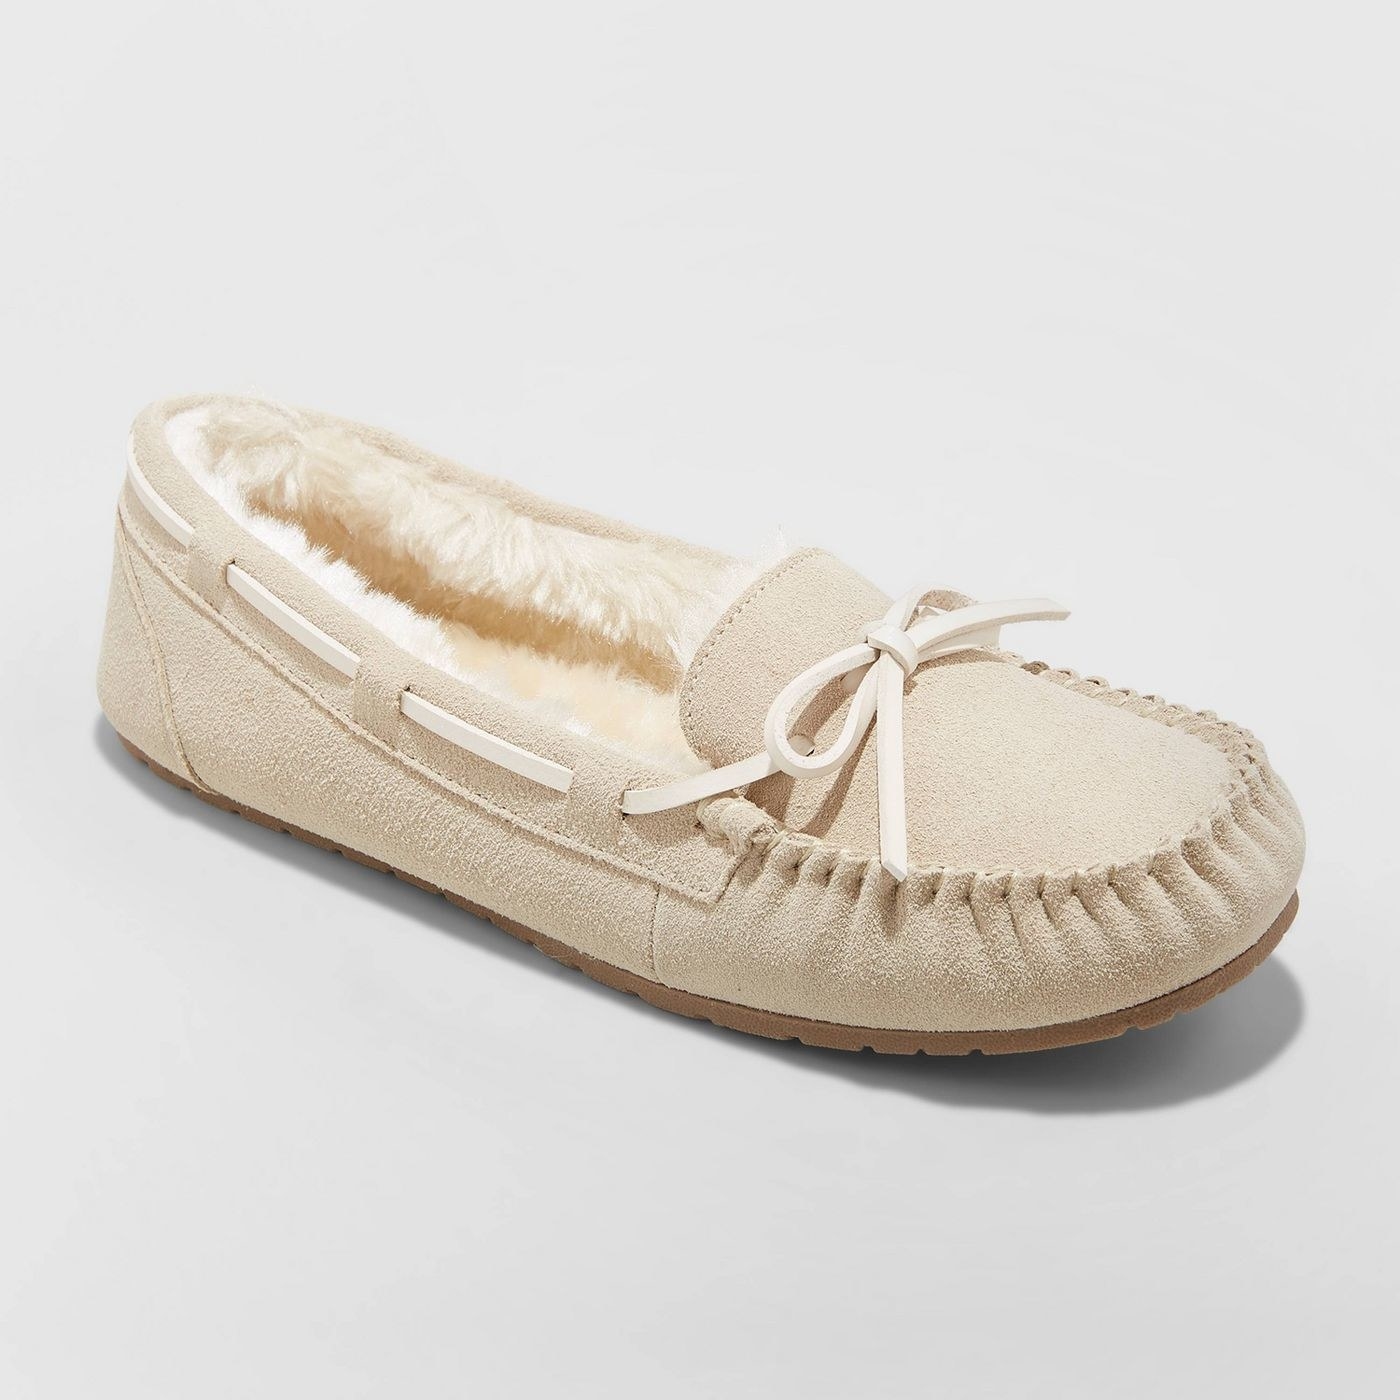 A sand moccasin slipper